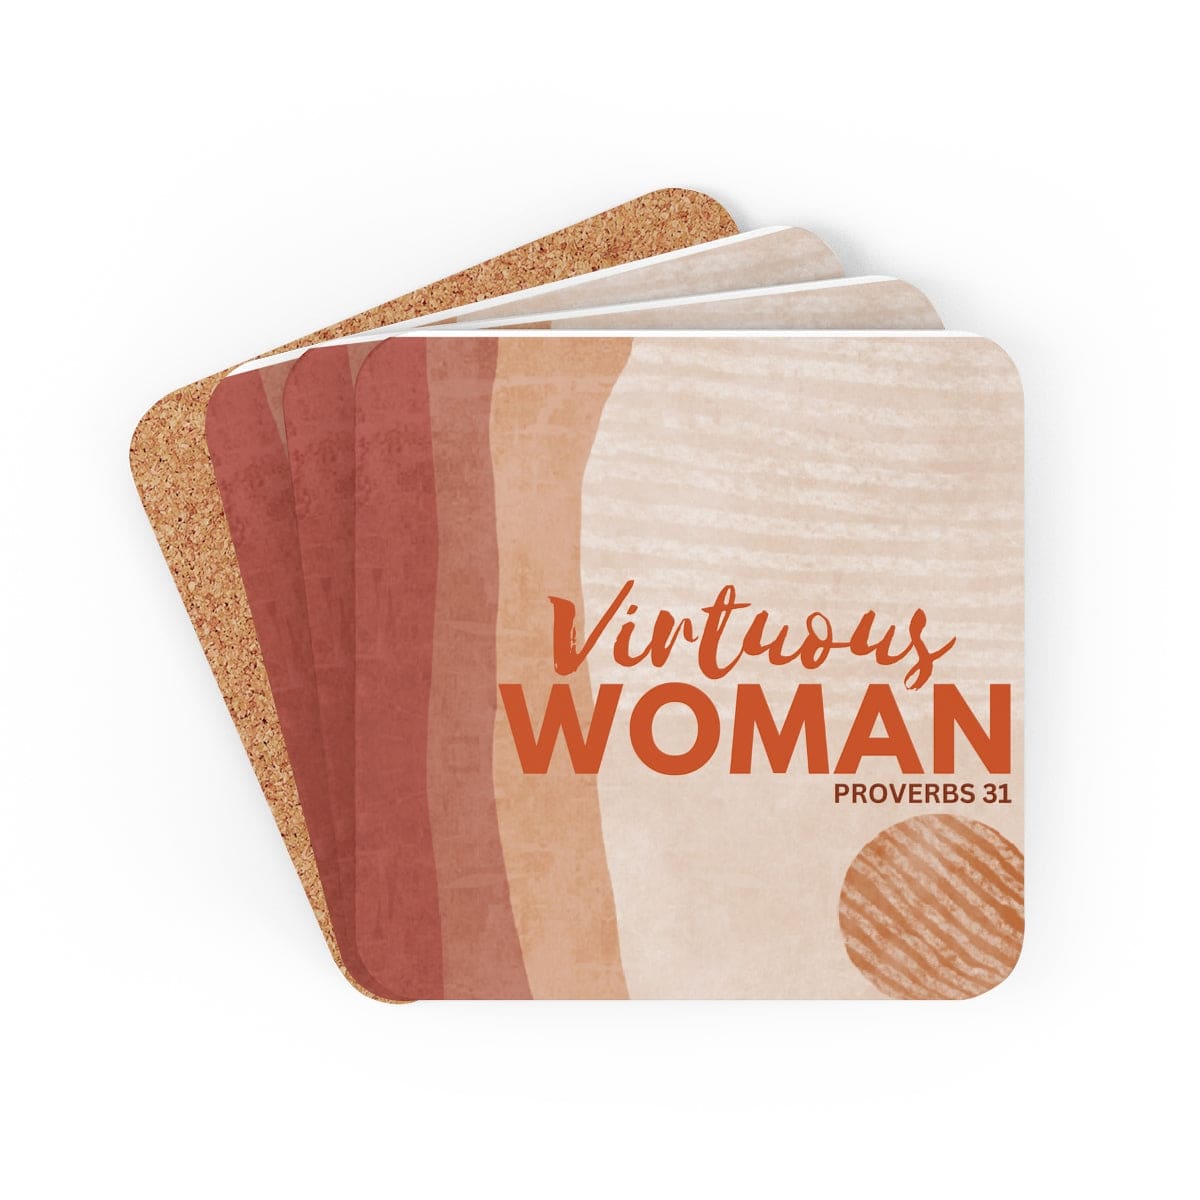 Corkwood Coaster Set - 4 Pieces Virtuous Woman - Proverbs 31 Neutral Tone